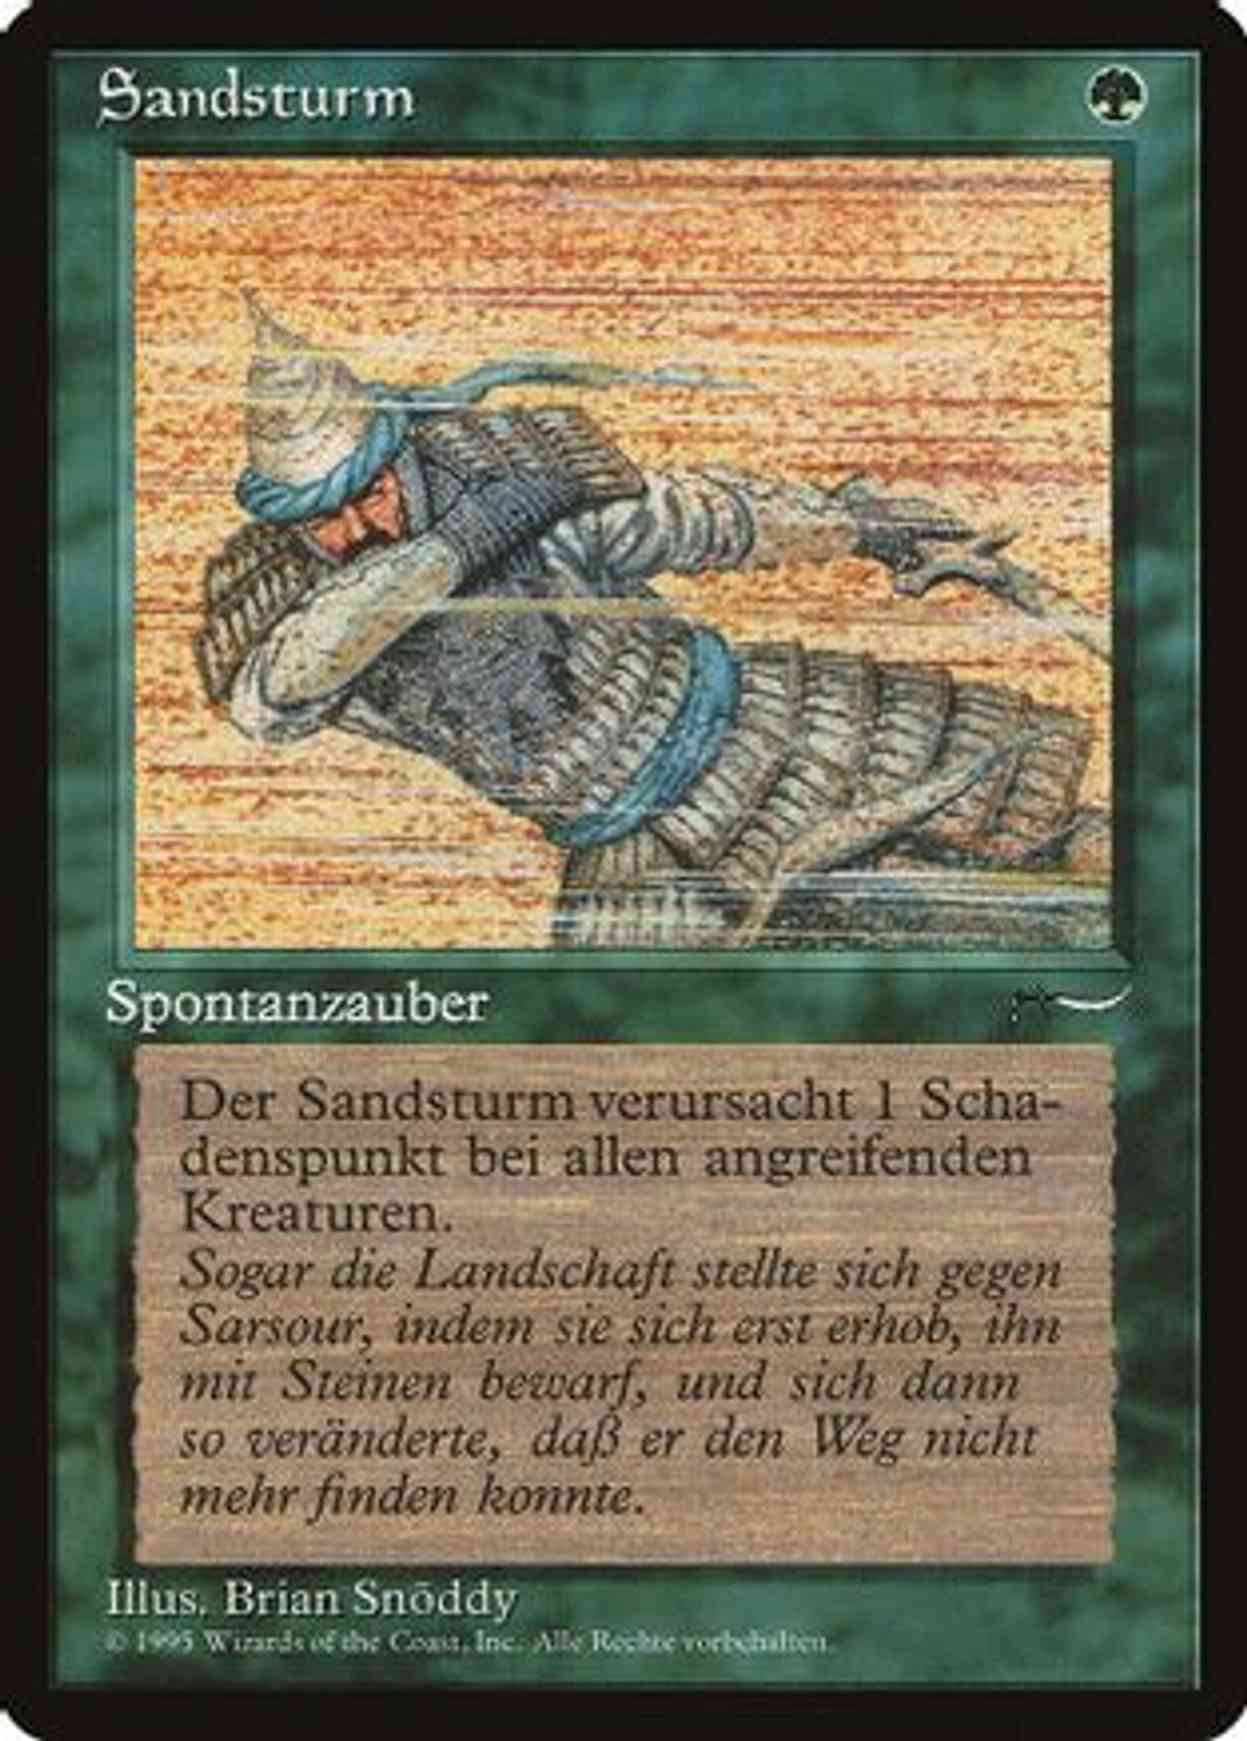 Sandstorm (German) - "Sandsturm" magic card front